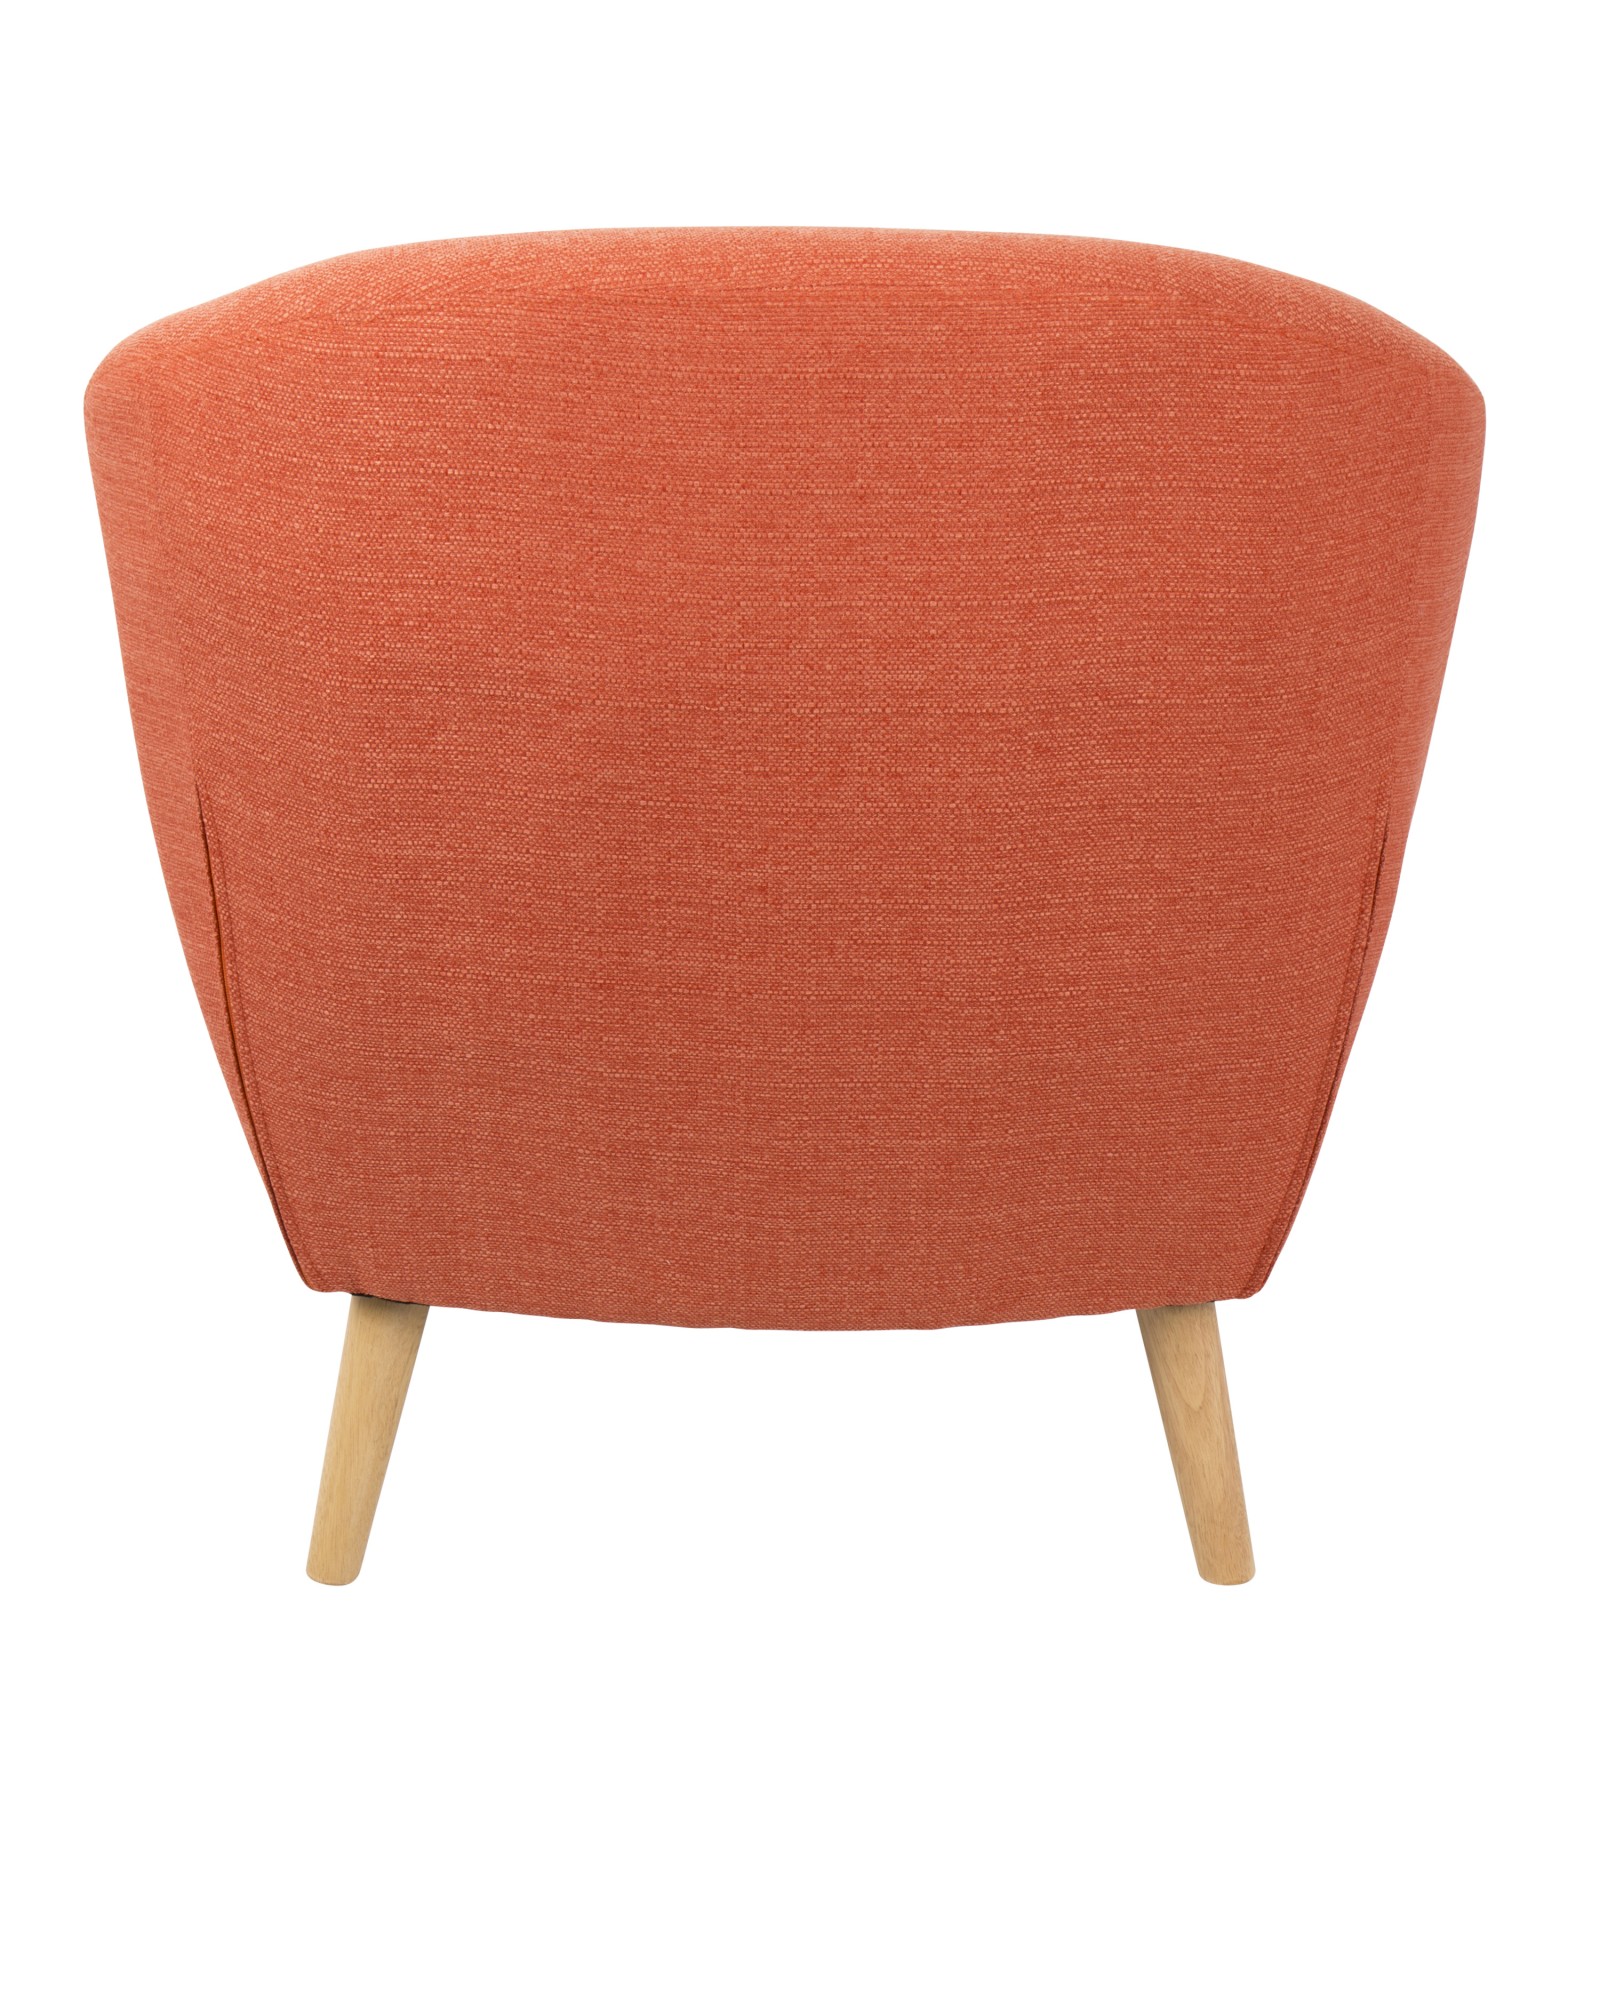 Rockwell Mid Century Modern Accent Chair in Orange